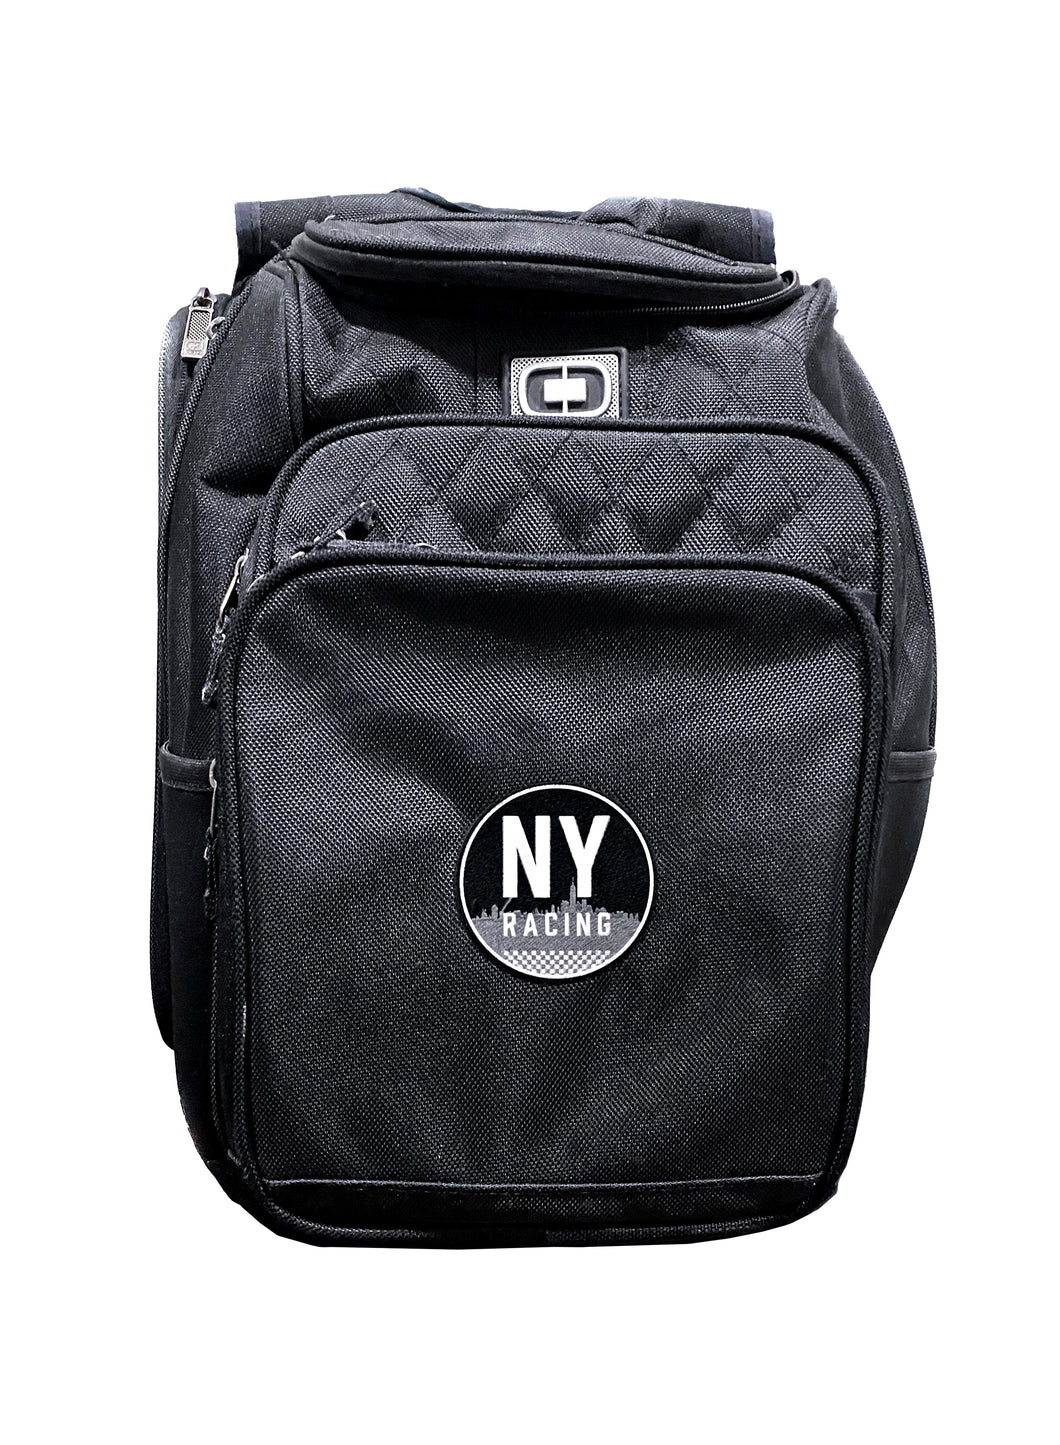 NY Racing Ogio Backpack